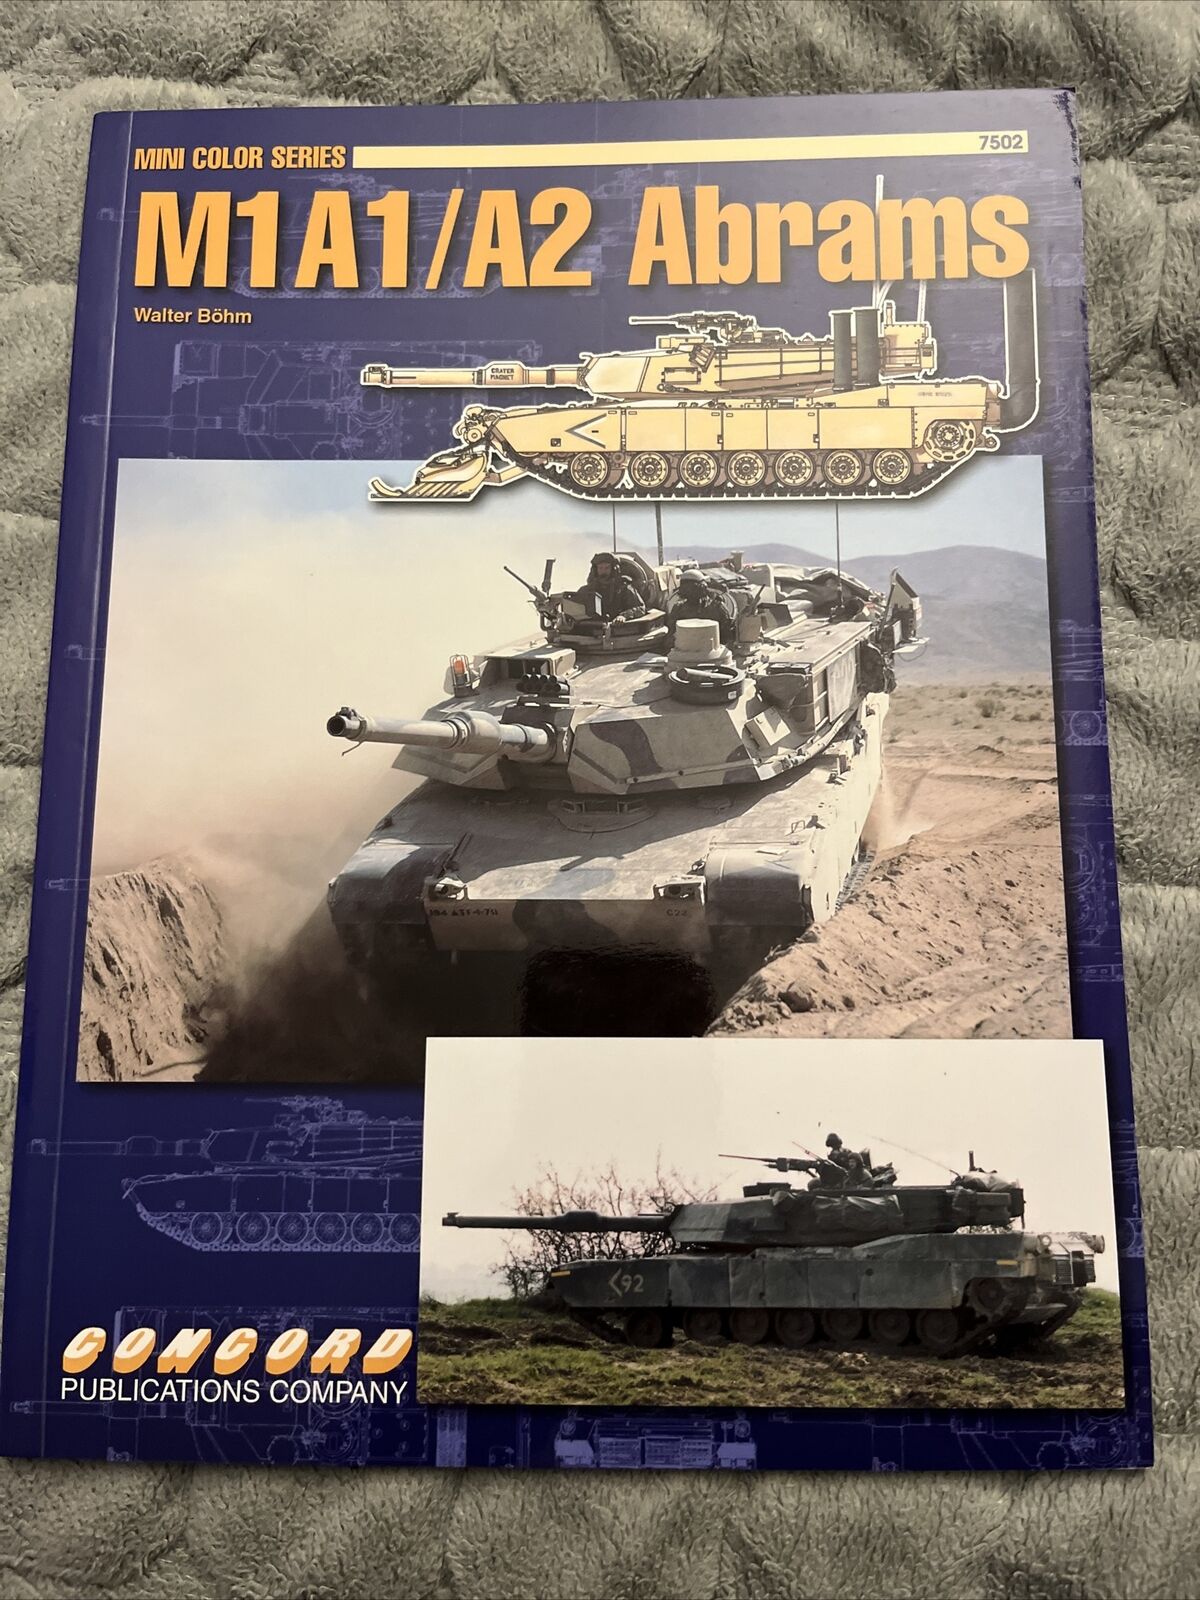 M1A1/A2 ABRAMS #7502 MINI COLOR SERIES TANK BOOK